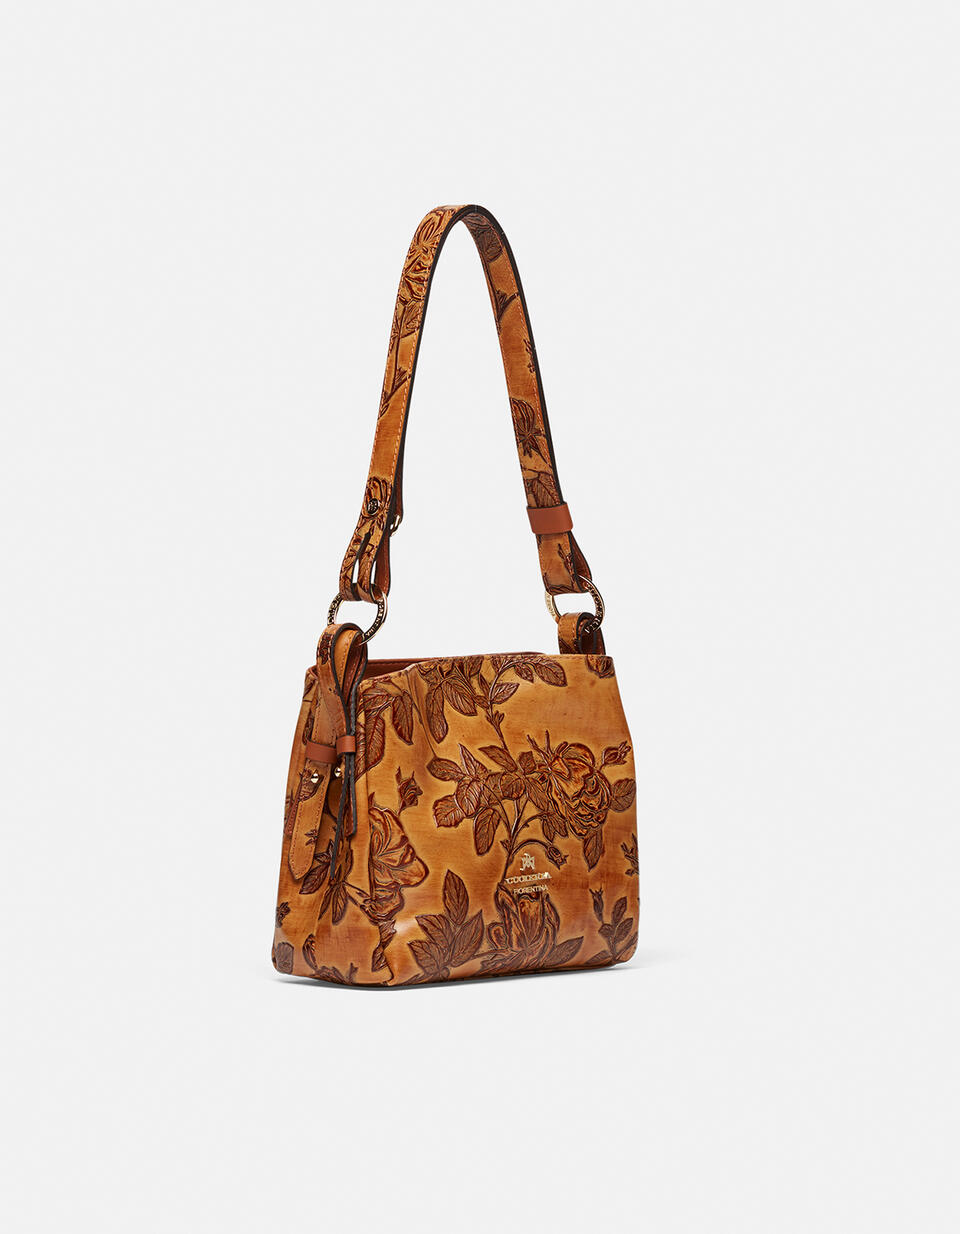 Small shoulder bag with shoulder strap - Shoulder Bags - WOMEN'S BAGS | bags  - Shoulder Bags - WOMEN'S BAGS | bagsCuoieria Fiorentina